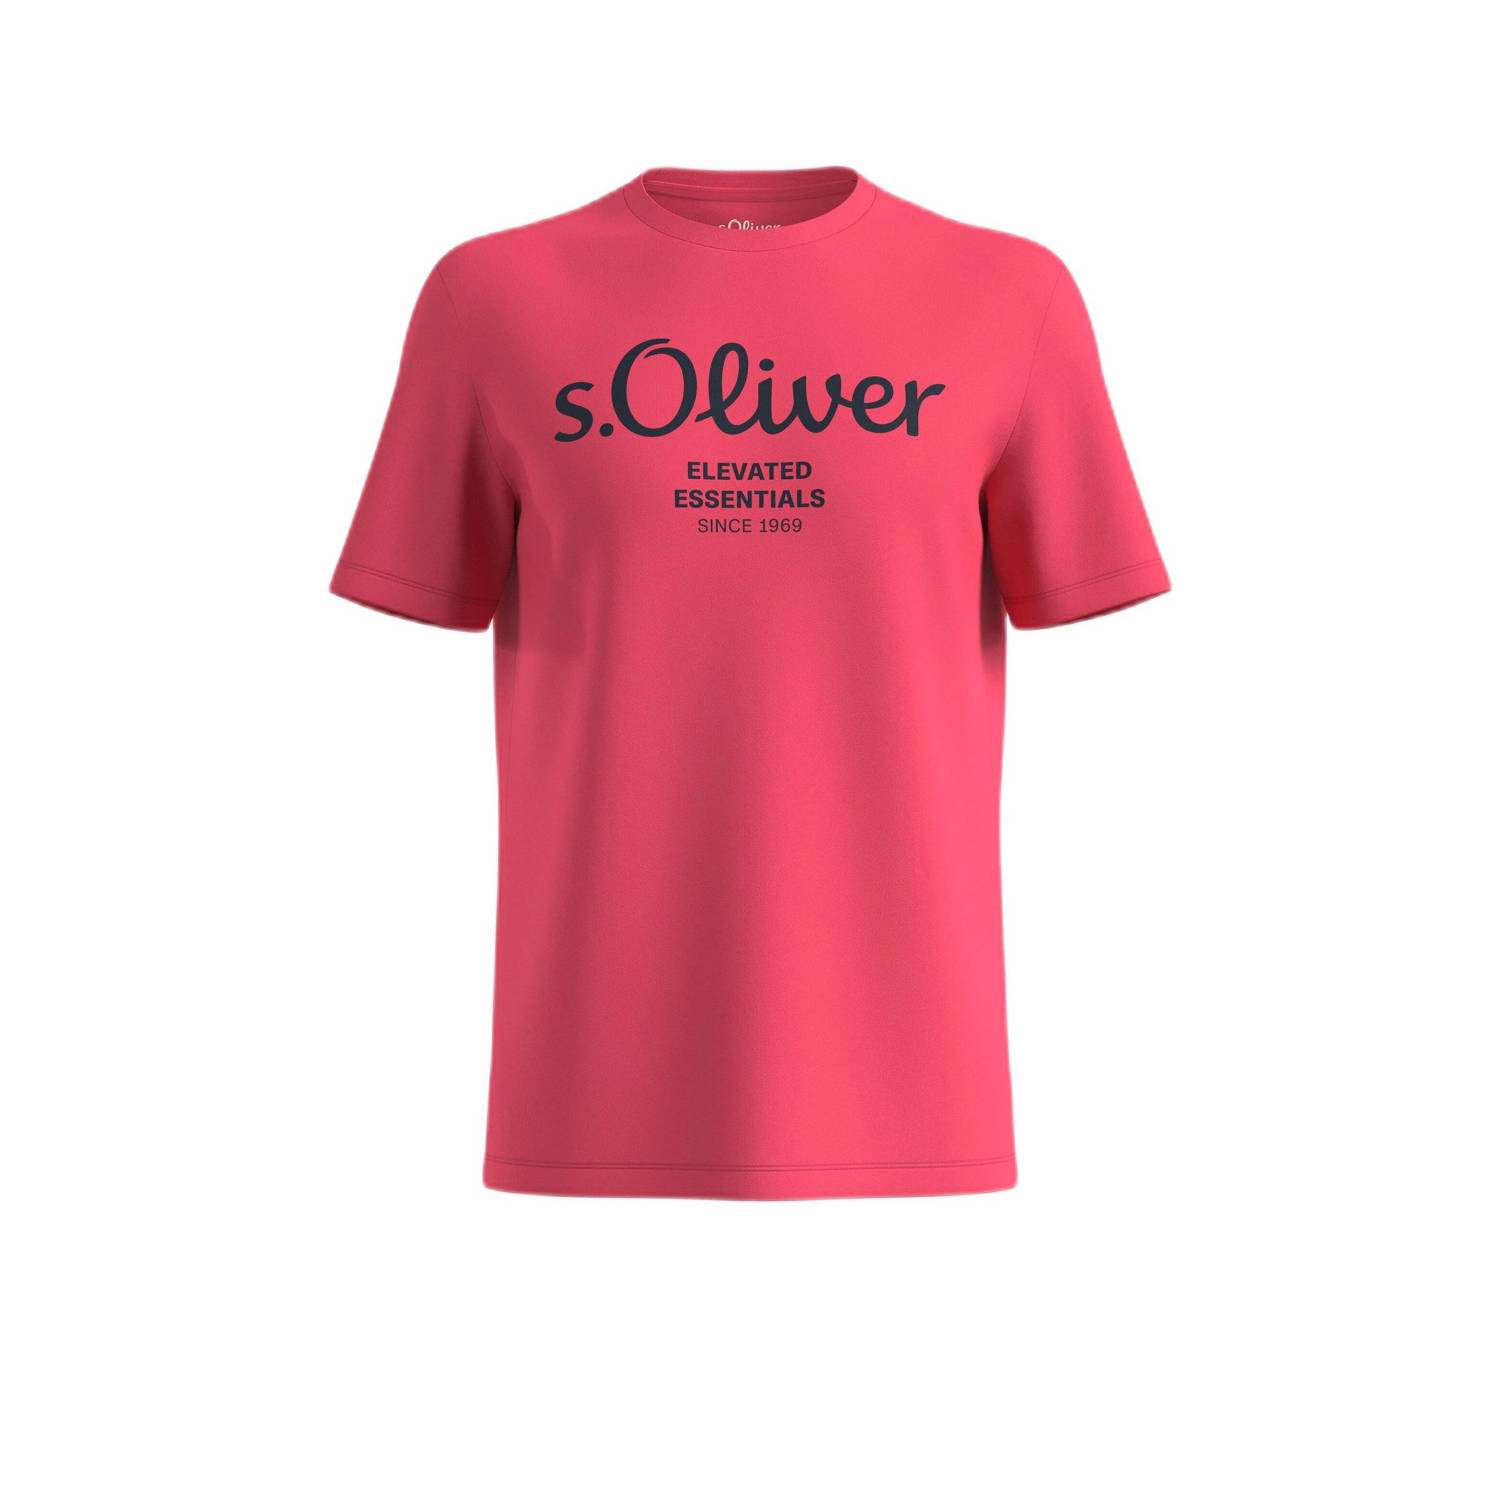 S.Oliver T-shirt met printopdruk roze